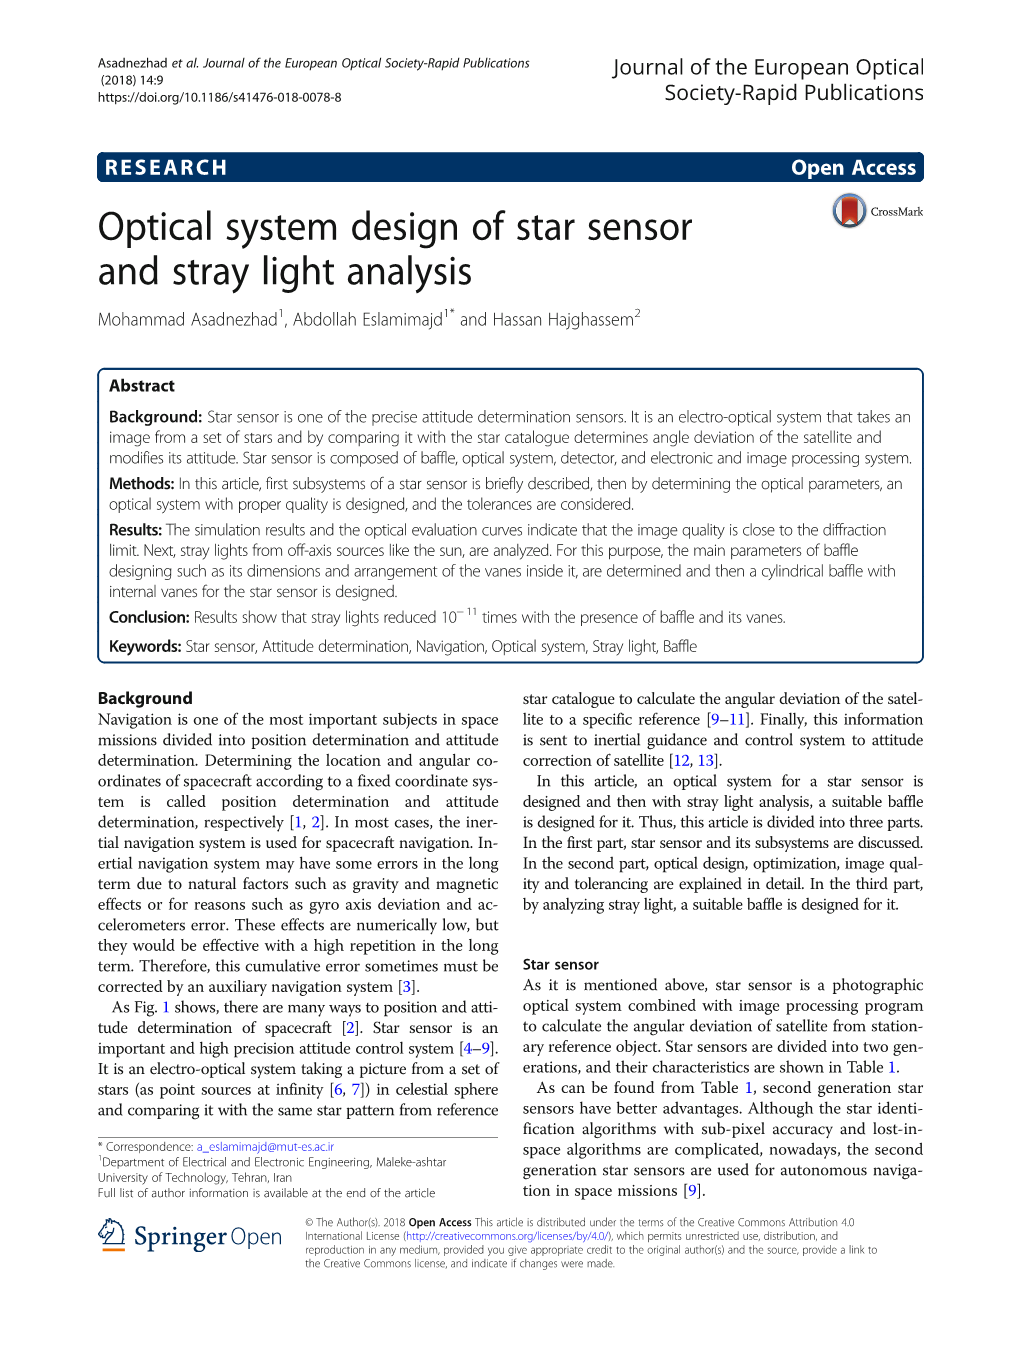 Optical System Design of Star Sensor and Stray Light Analysis Mohammad Asadnezhad1, Abdollah Eslamimajd1* and Hassan Hajghassem2